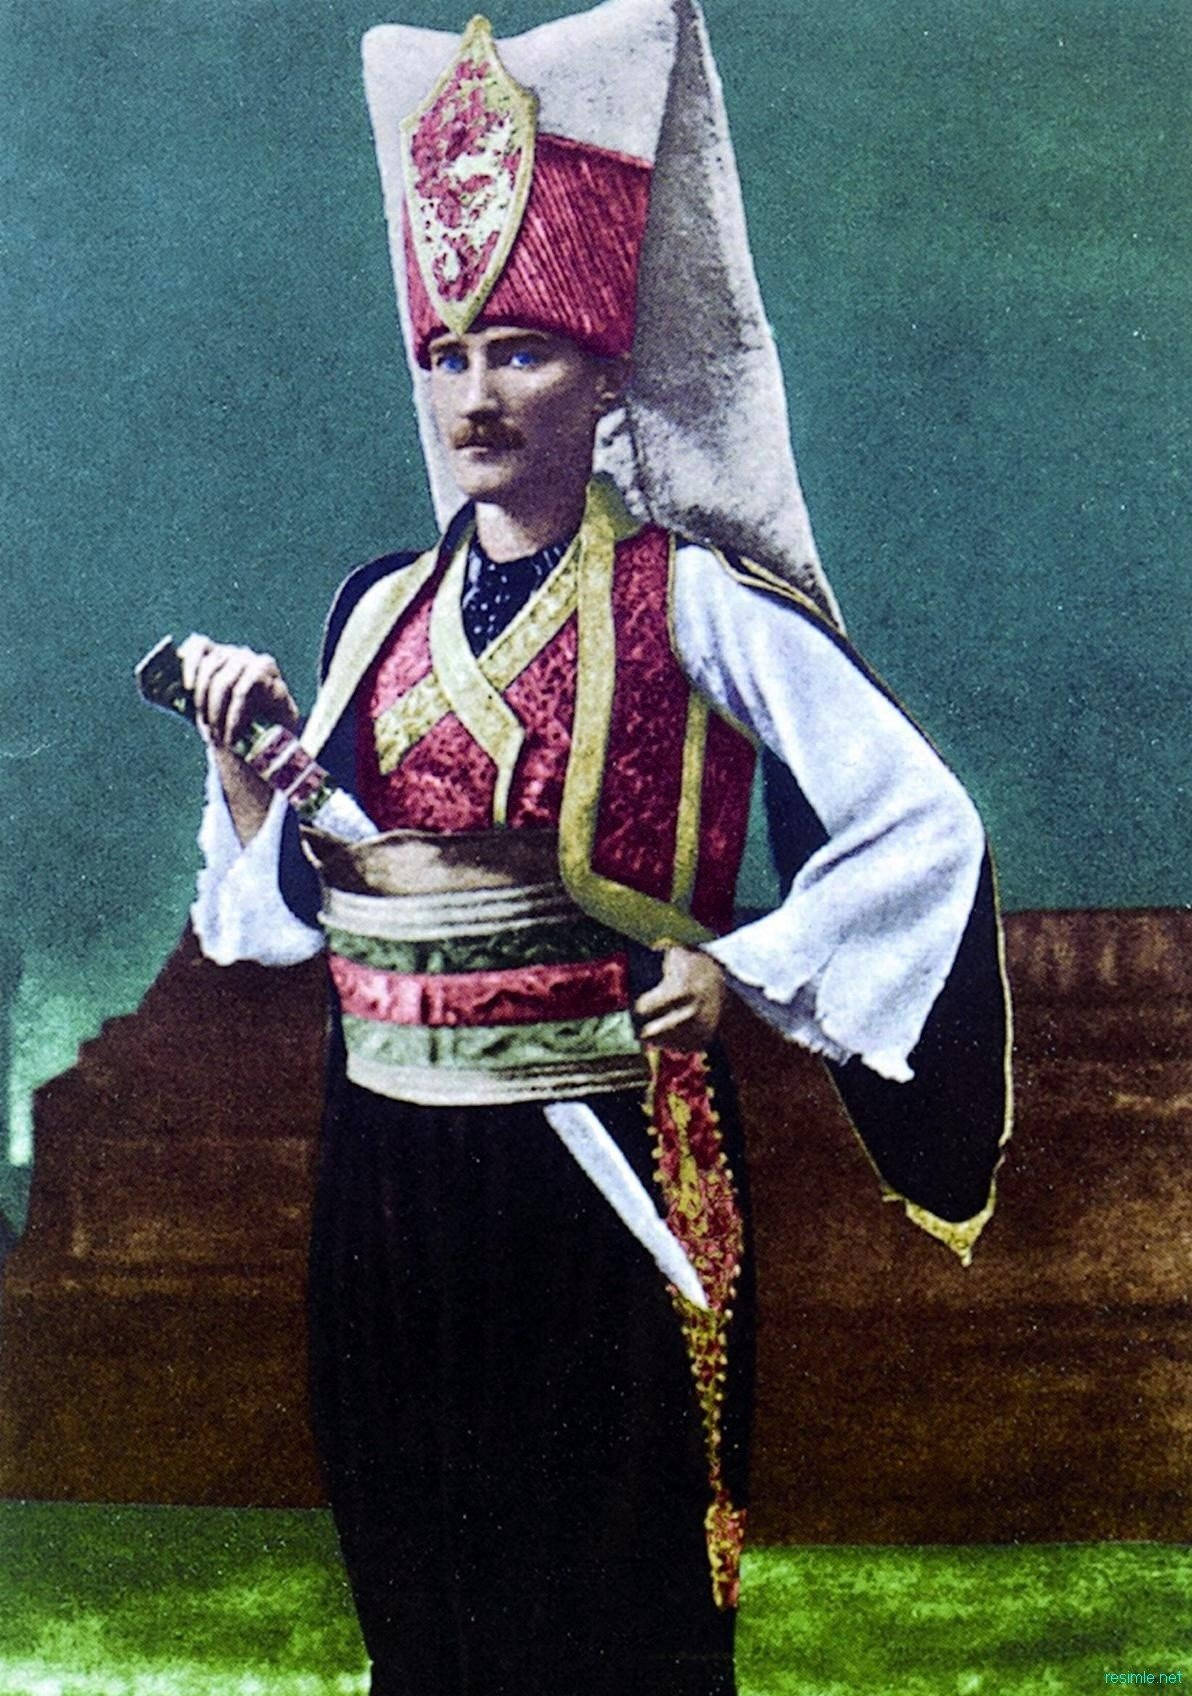 Atatürki En Janitsjaruniform. Wallpaper